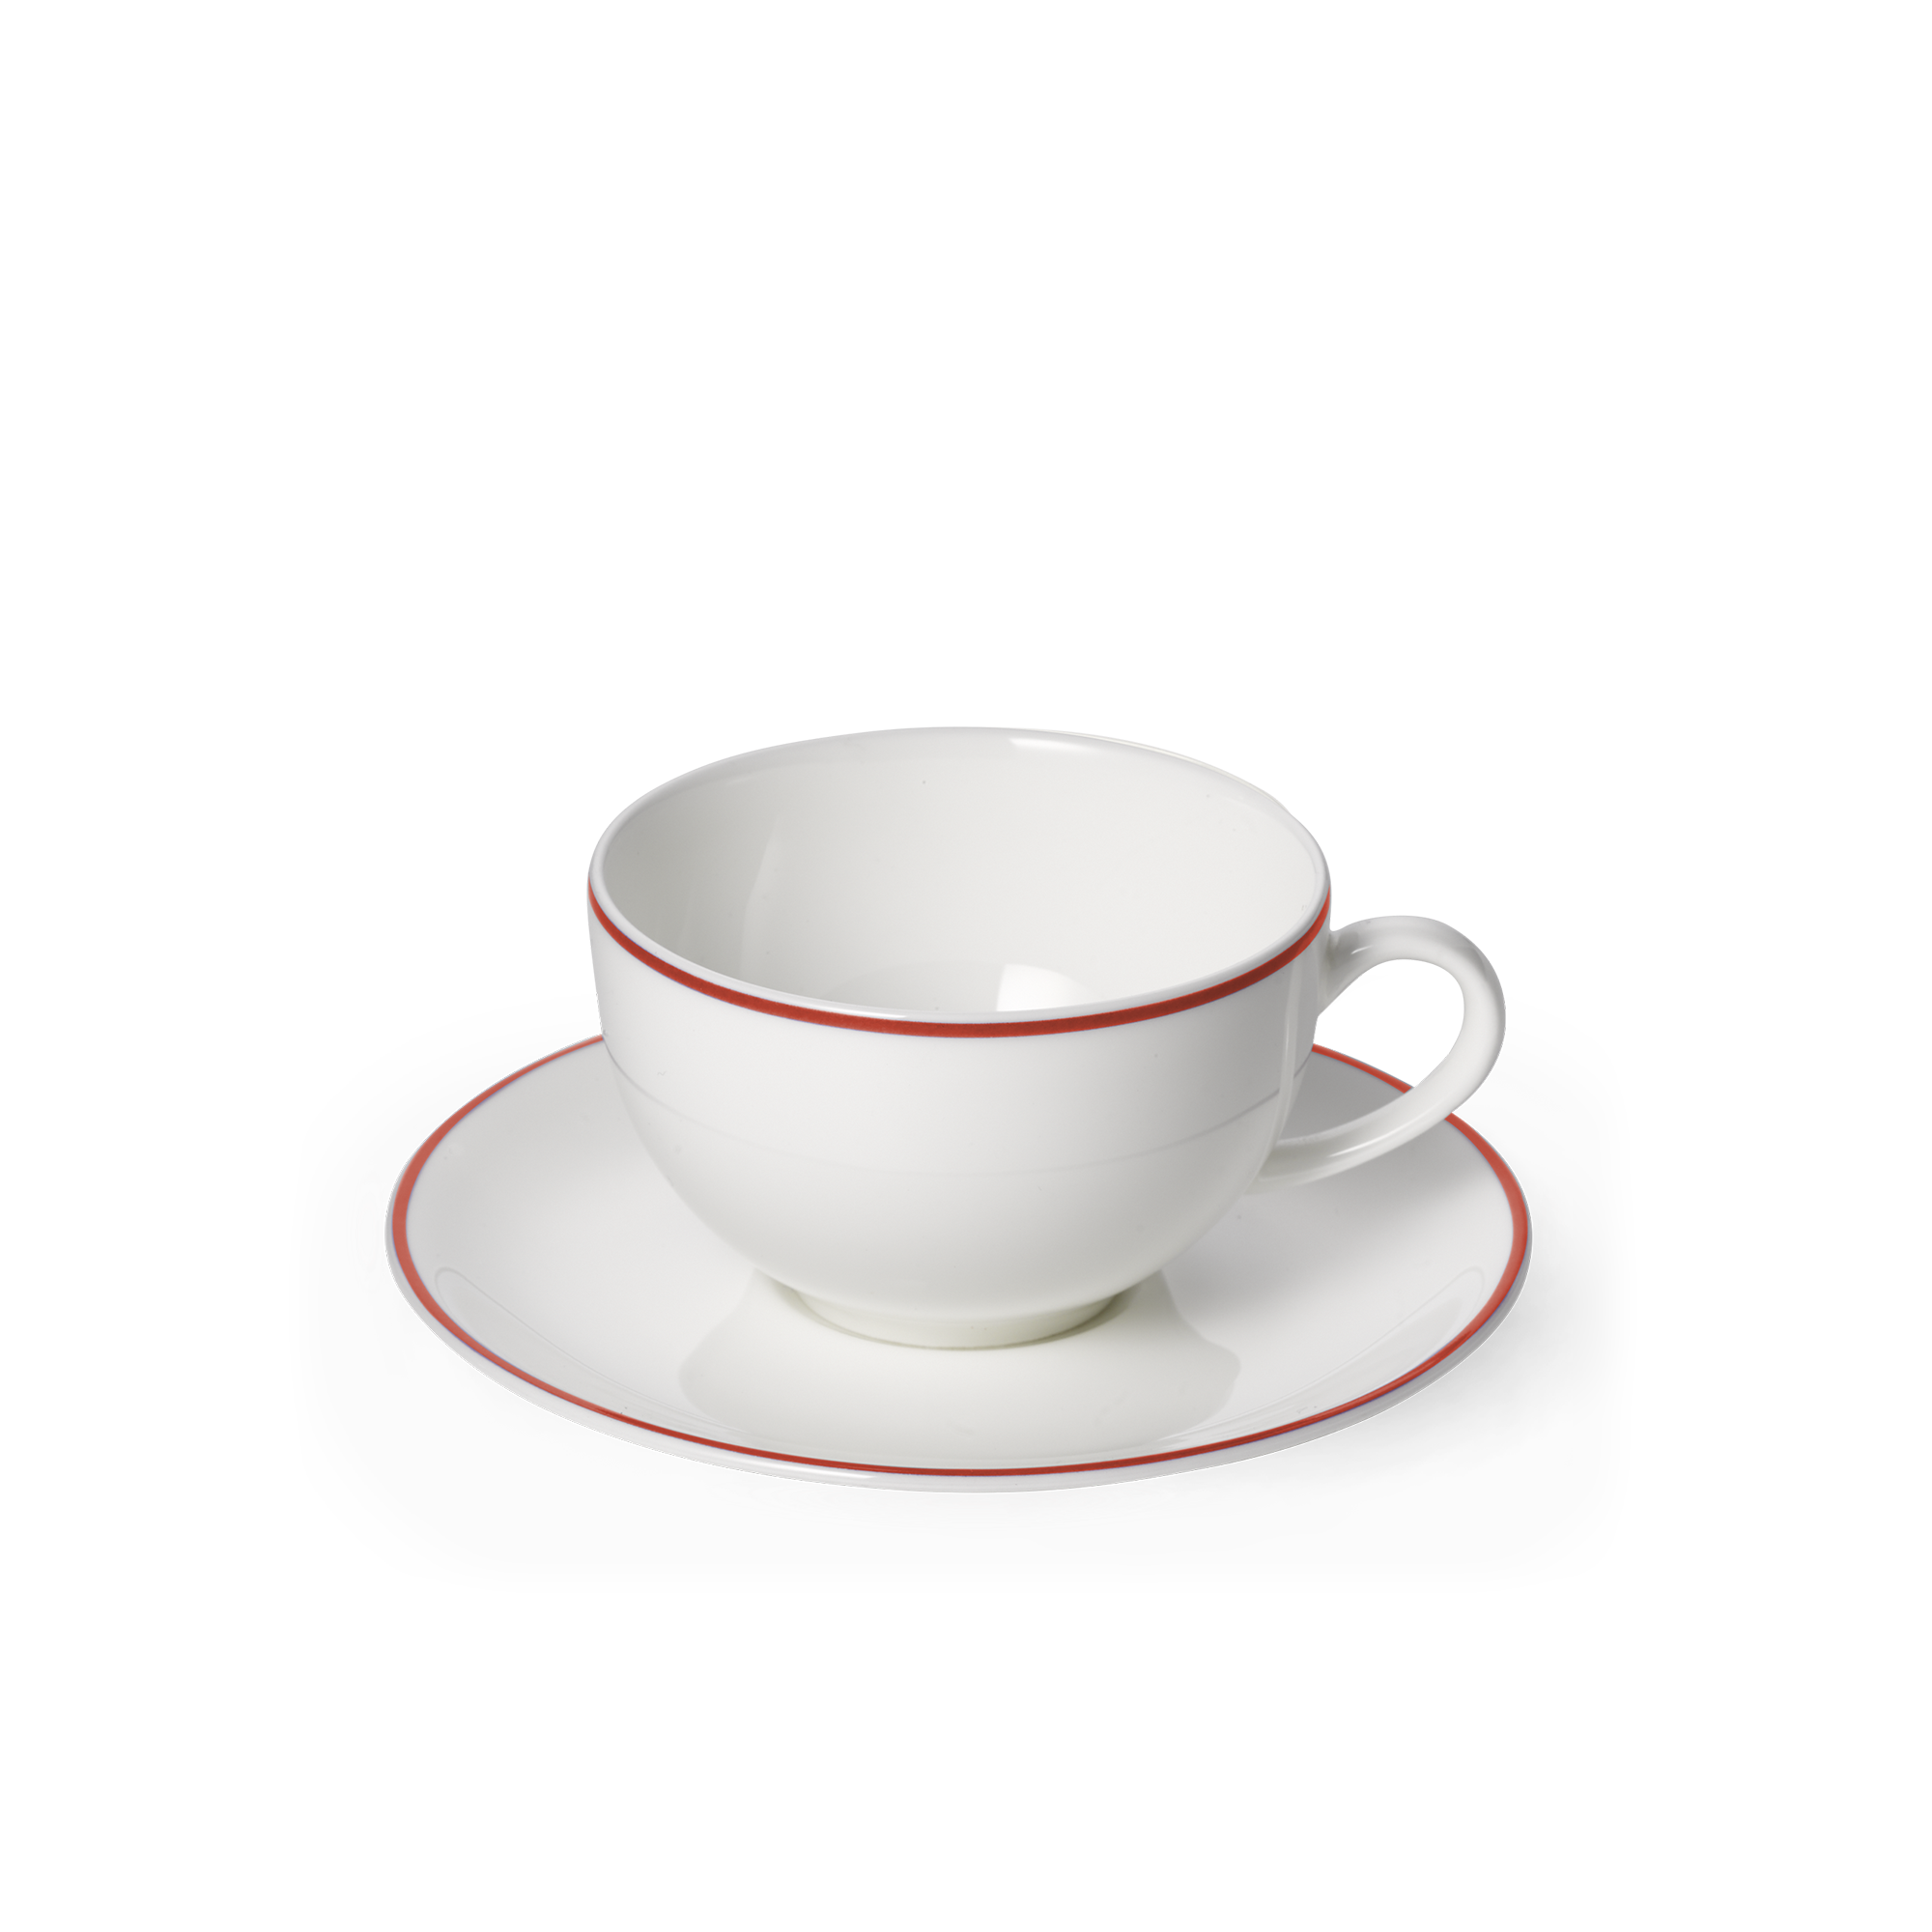 Simplicity red coffee mug